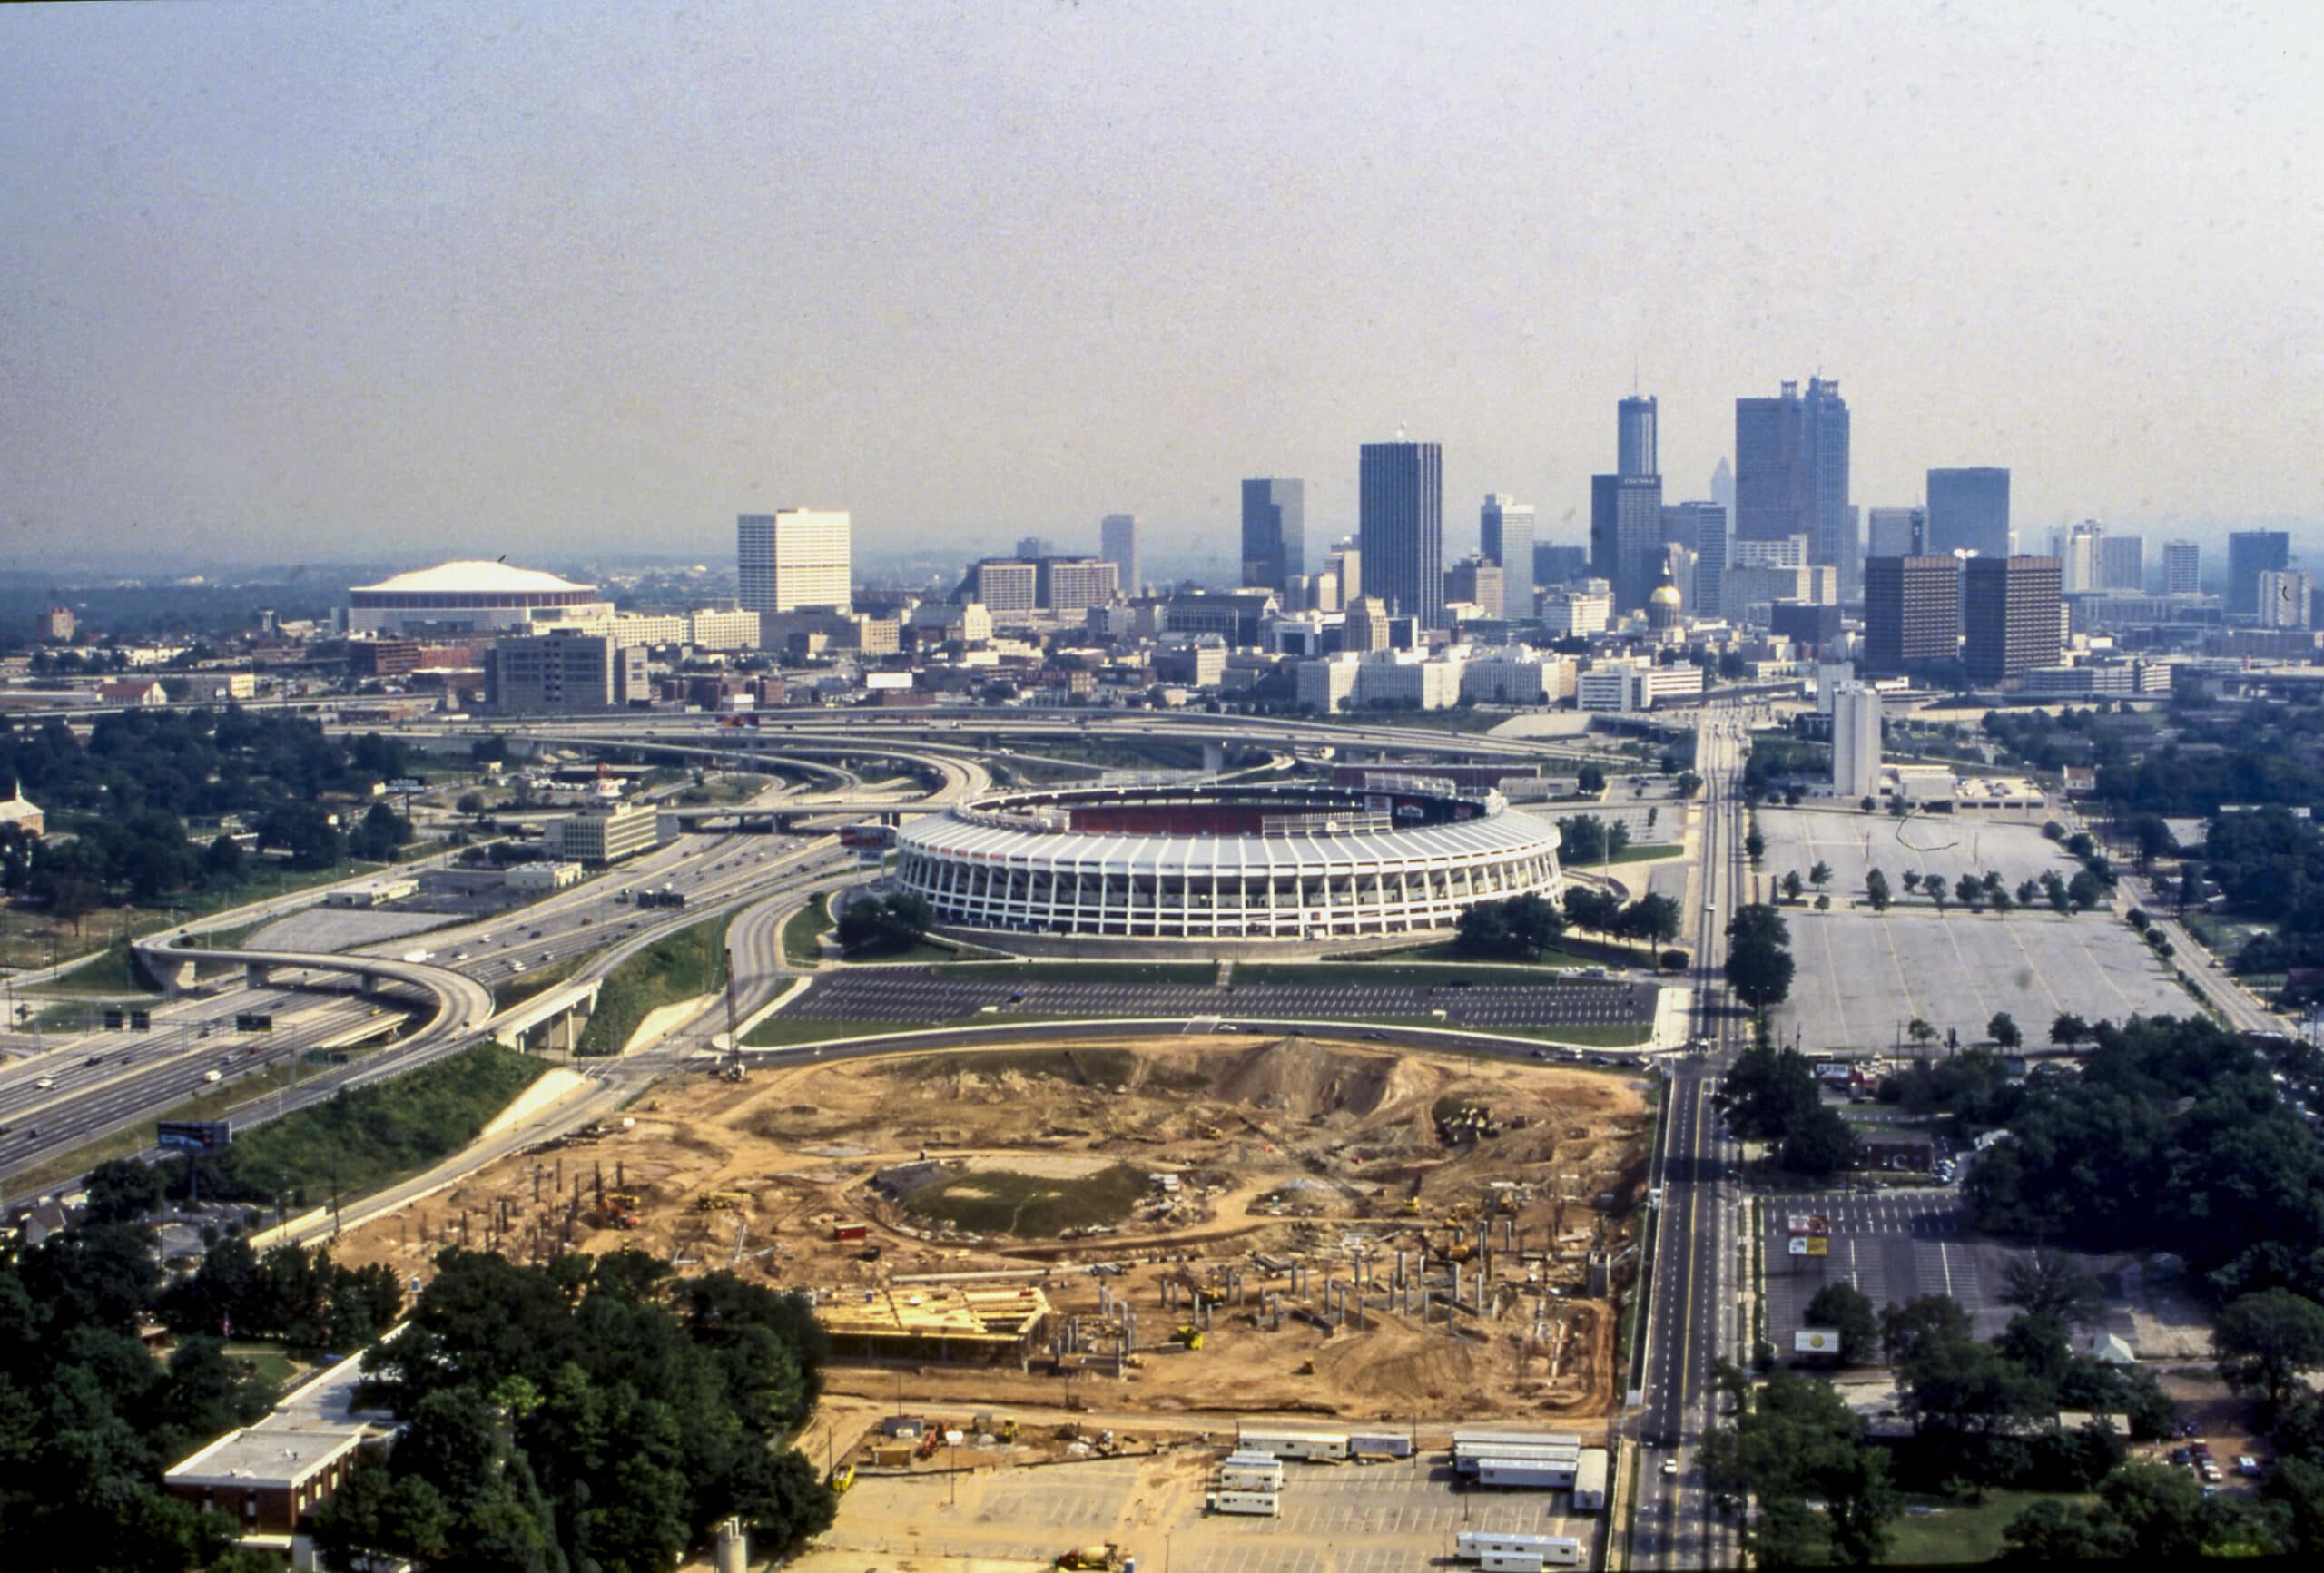 Stop 2, Site of Atlanta-Fulton County Stadium